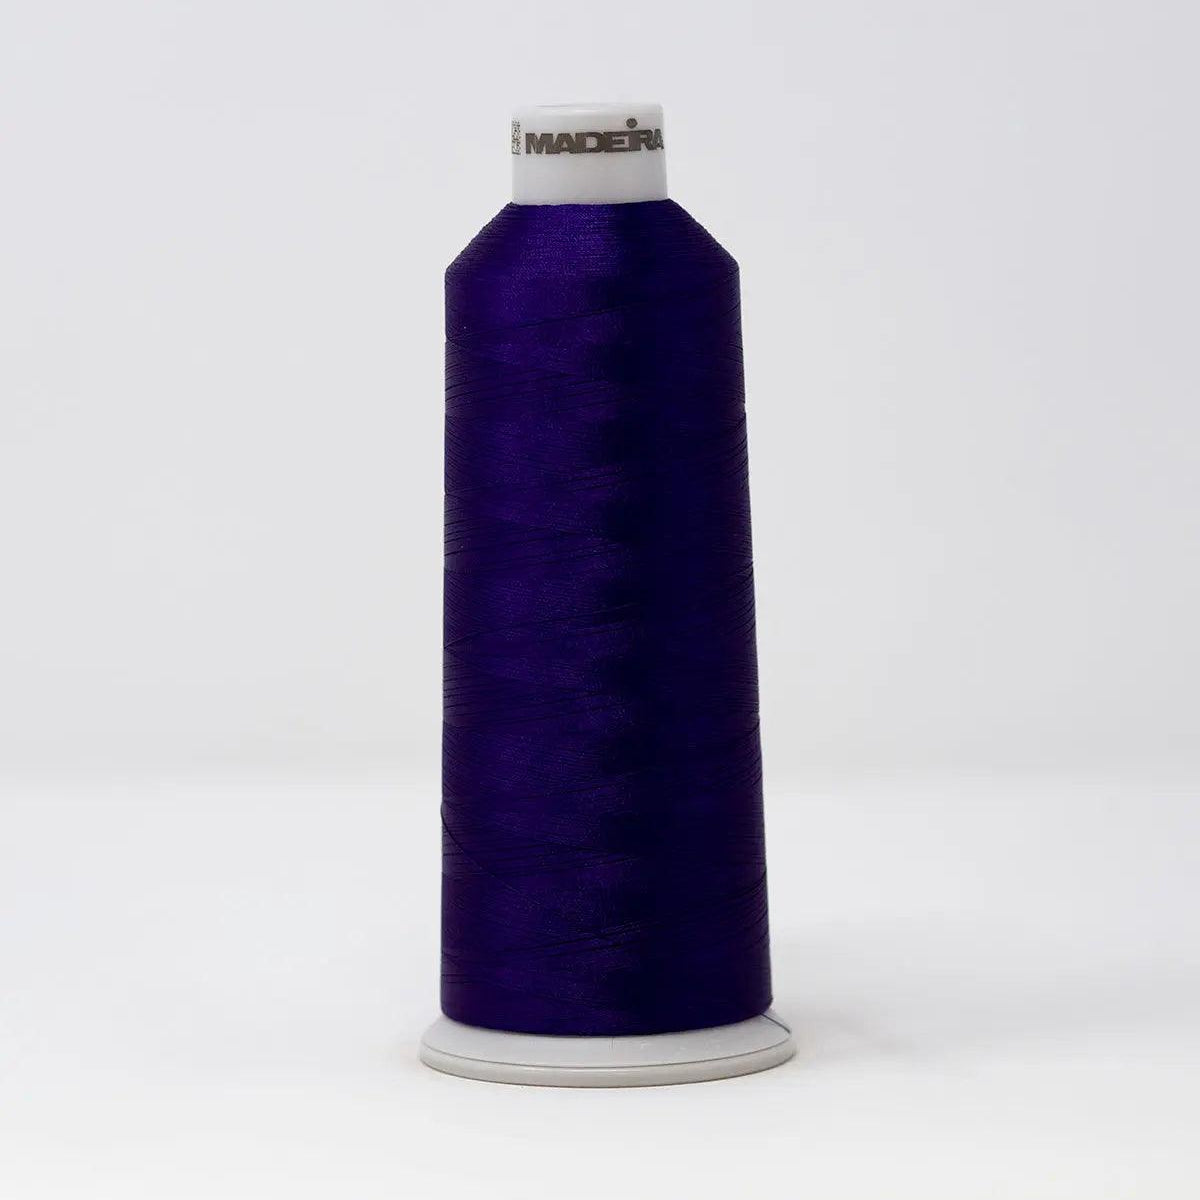 822 Purple/Gold Superior Spirit Variegated Polyester Thread